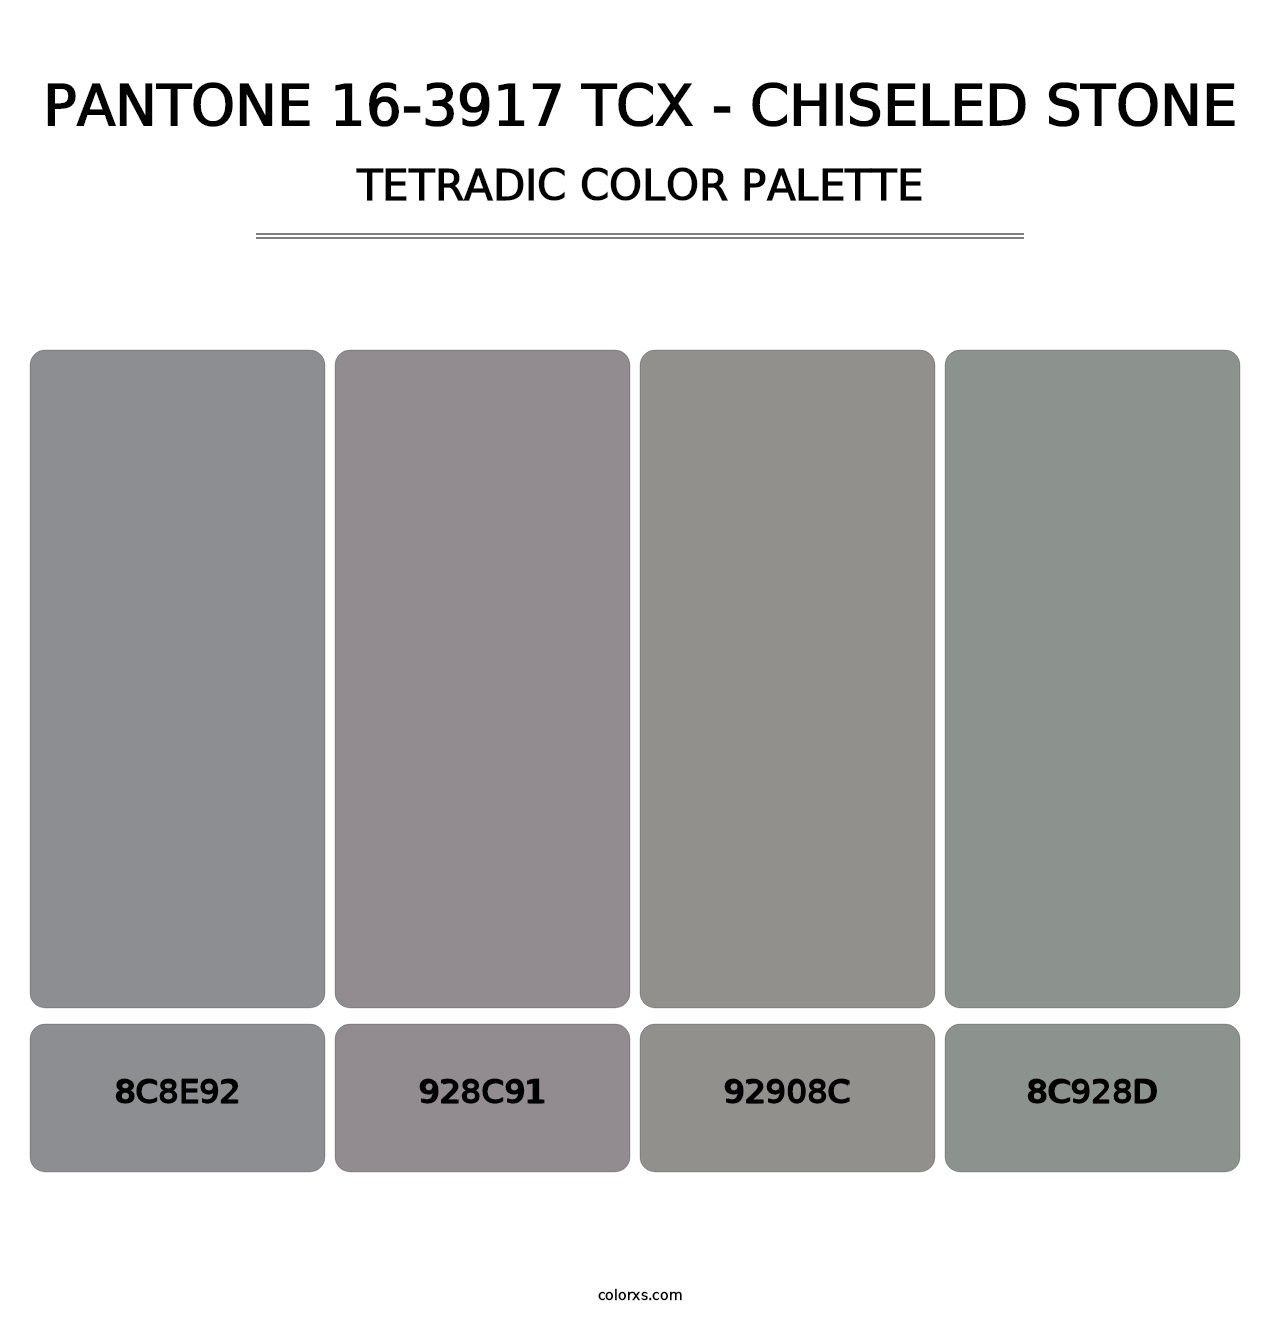 PANTONE 16-3917 TCX - Chiseled Stone - Tetradic Color Palette